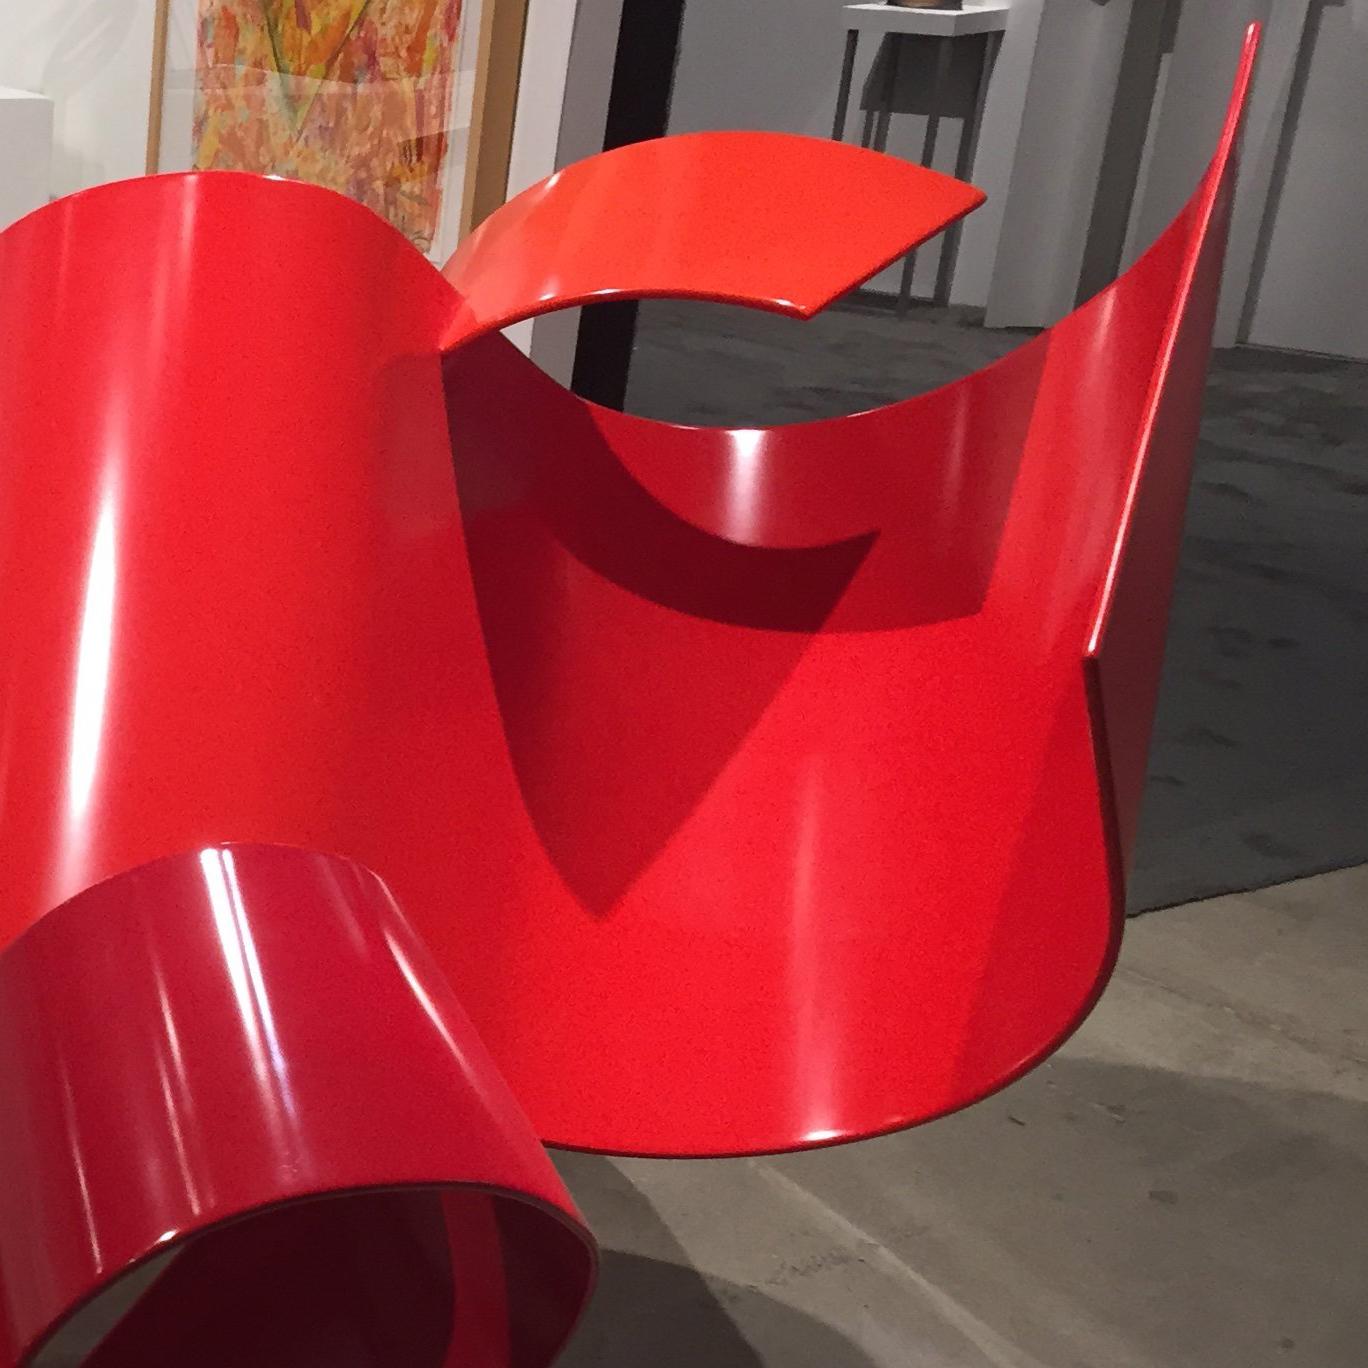 Undulating Trio in Red - Sculpture by Zammy Migdal